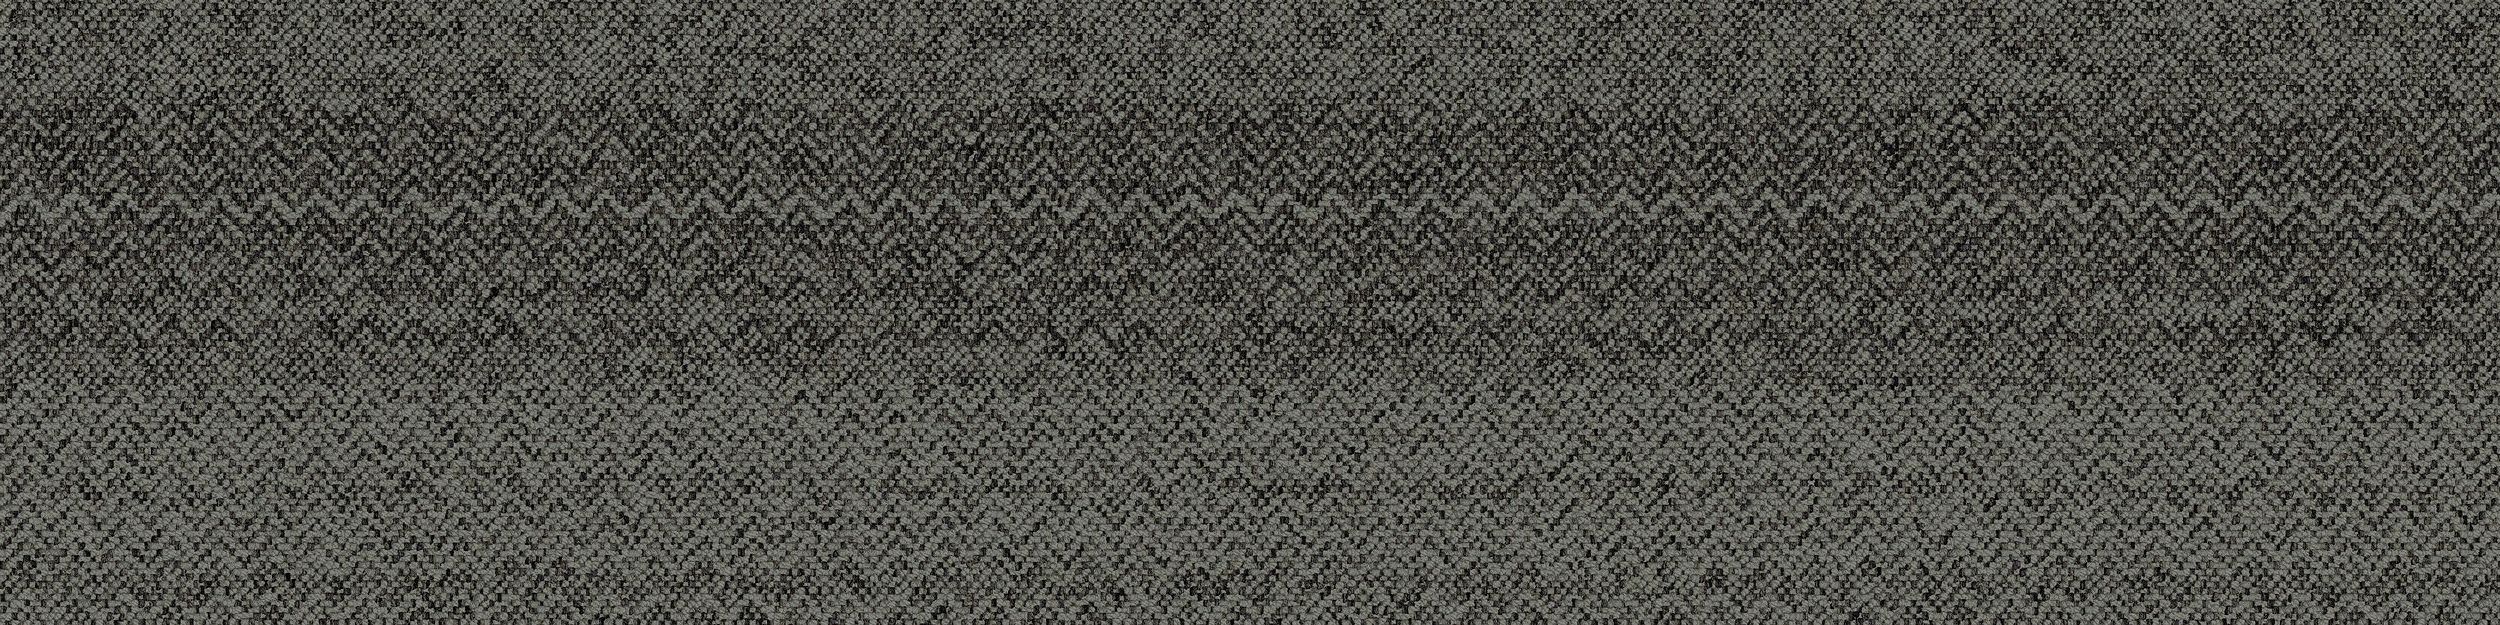 Stitchery Carpet Tile In Nickel Stitchery image number 2